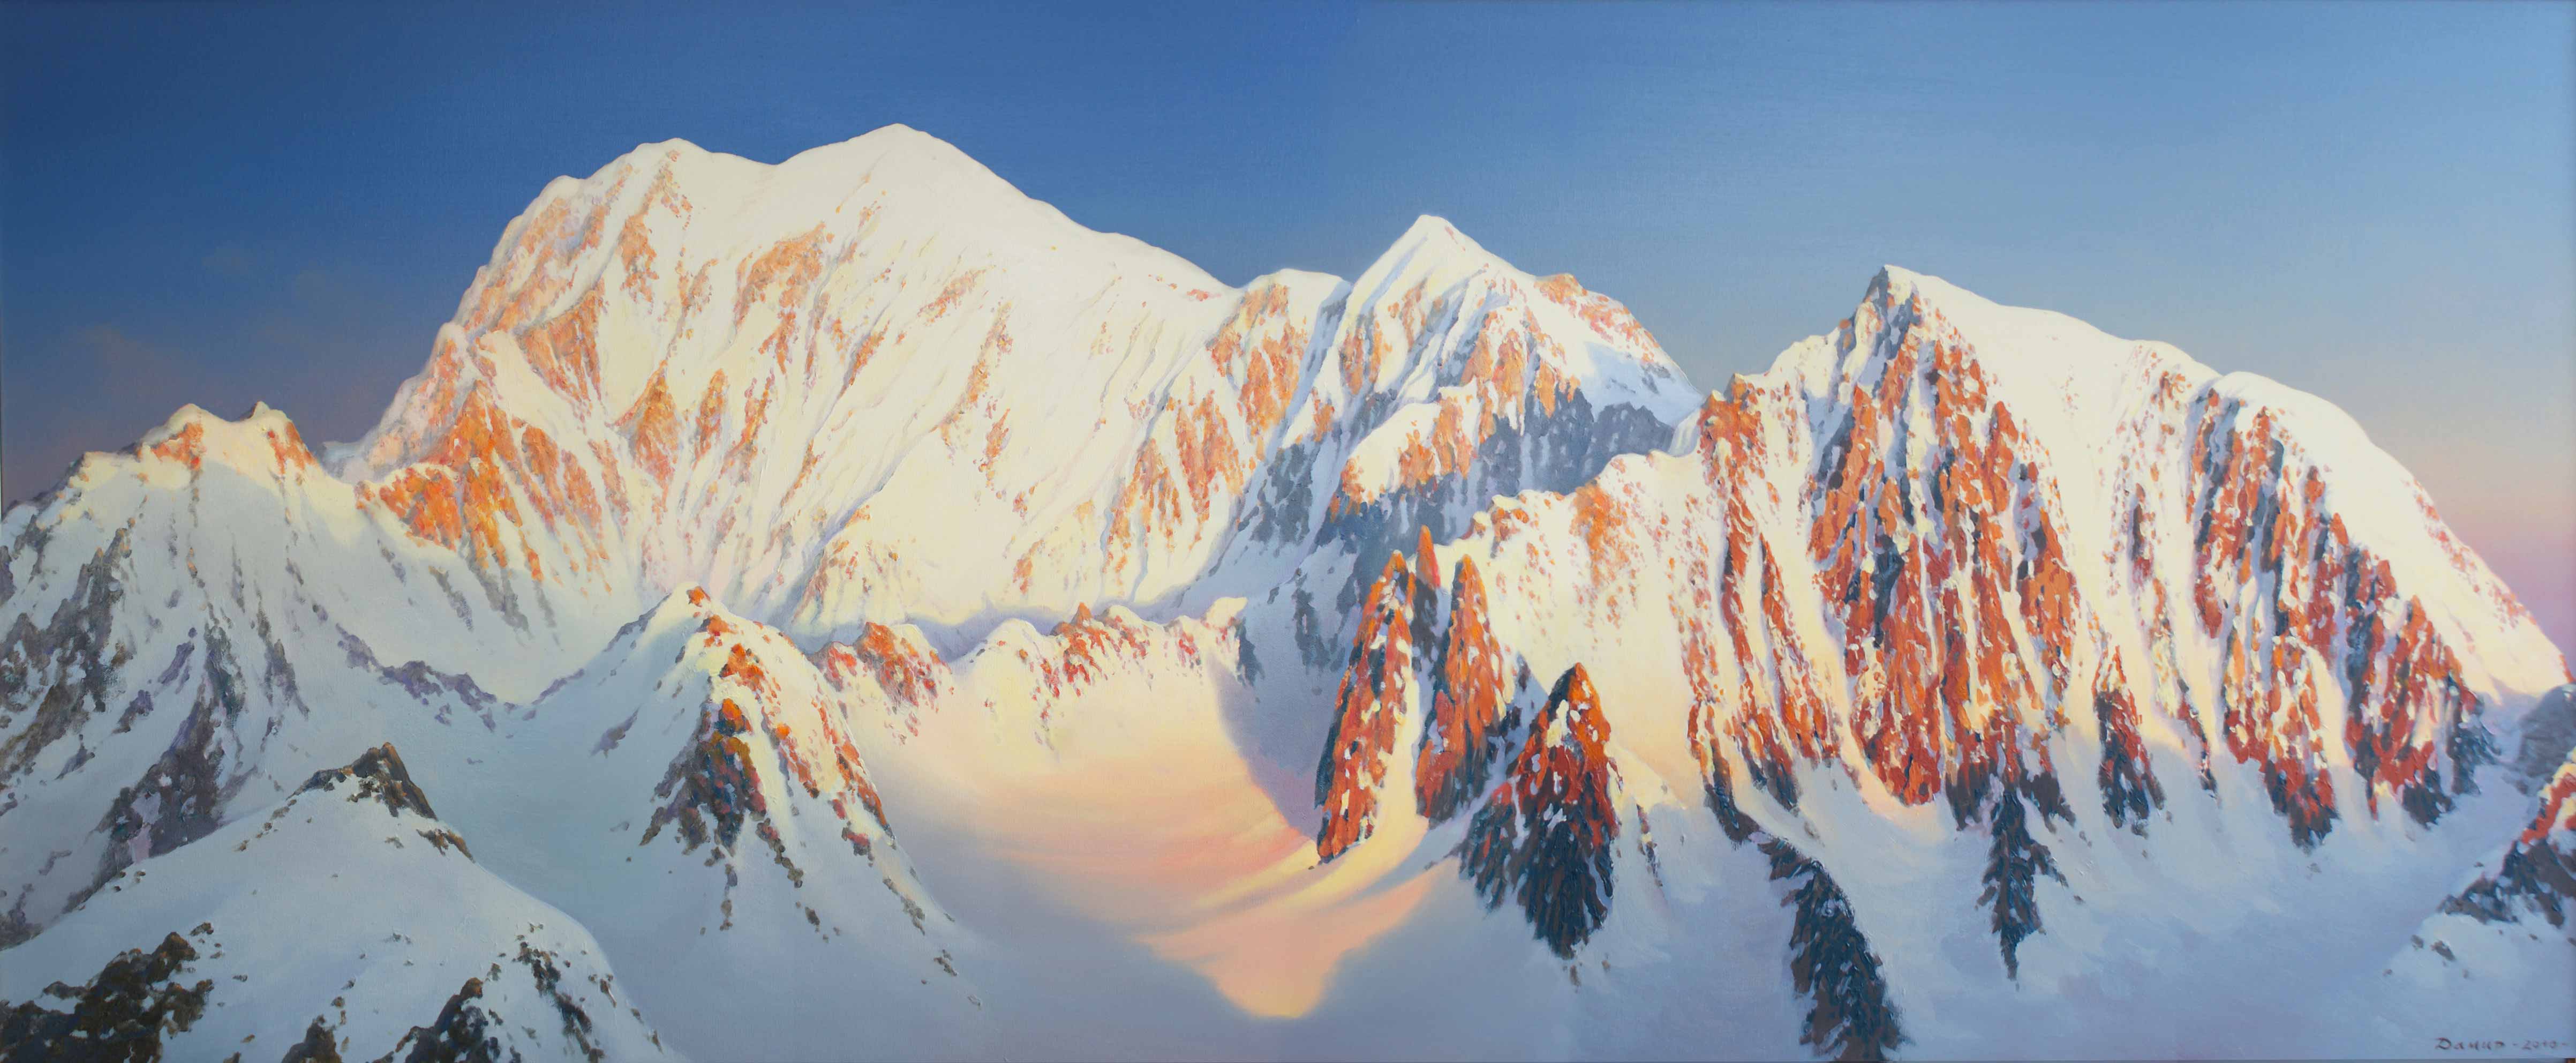 Mountain peak, Damir Krivenko, Buy the painting Oil